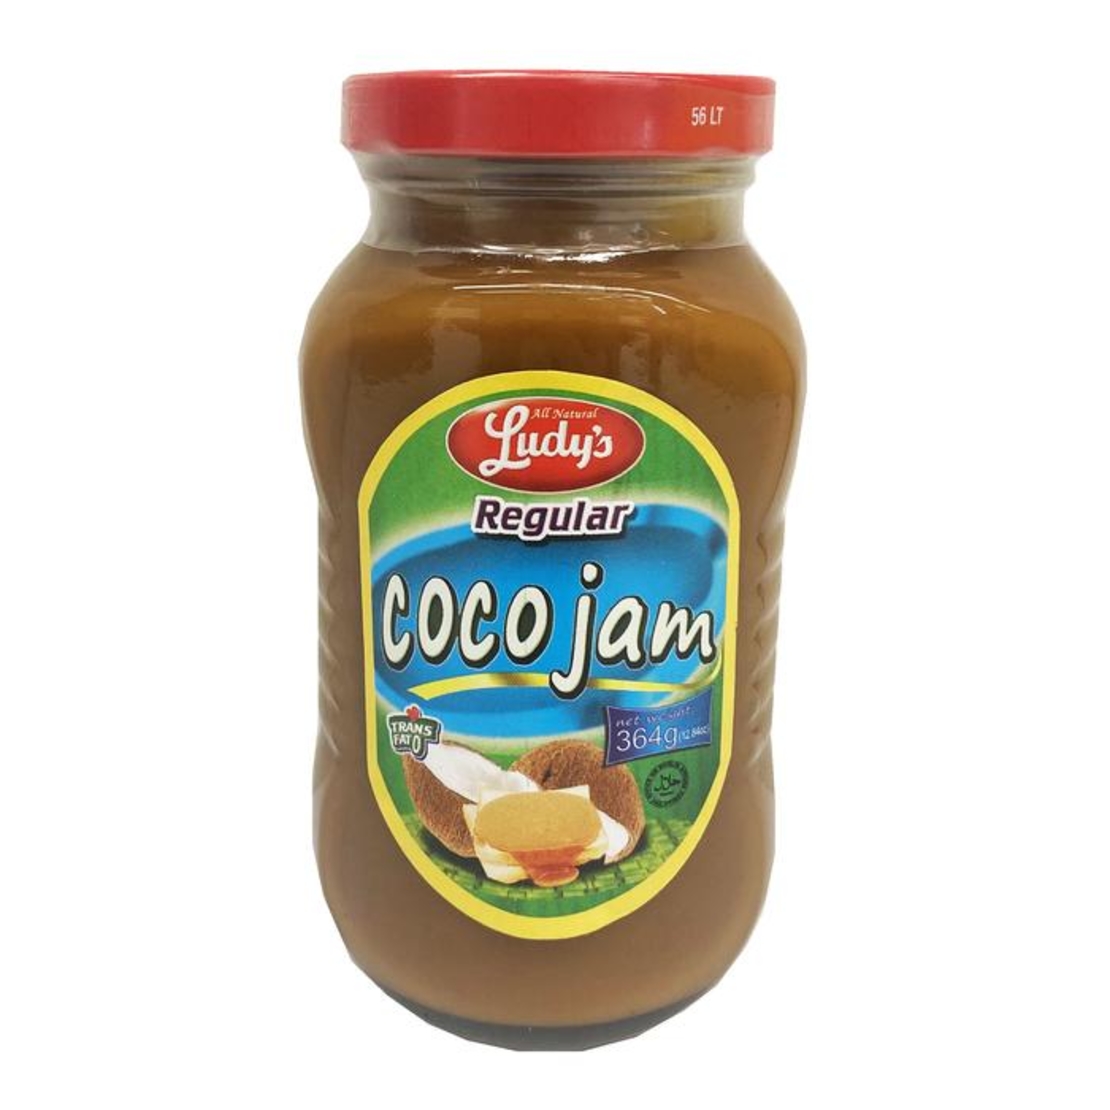 Ludy's - Regular Coco Jam 364g